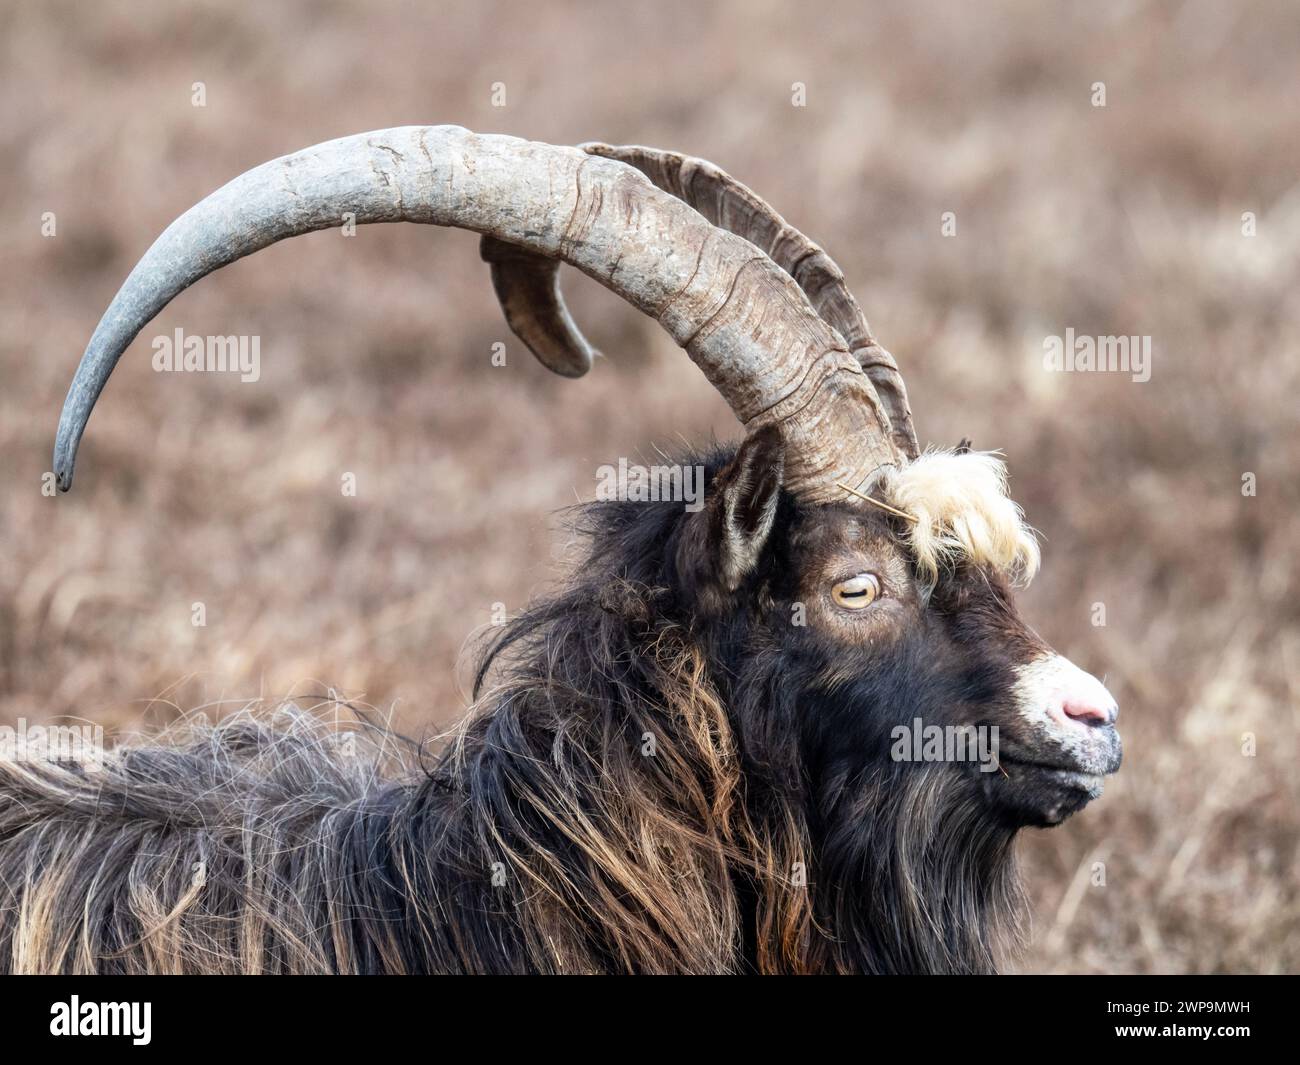 A Wild billy Goat, on the Oa, Islay, Scotland, UK. Stock Photo